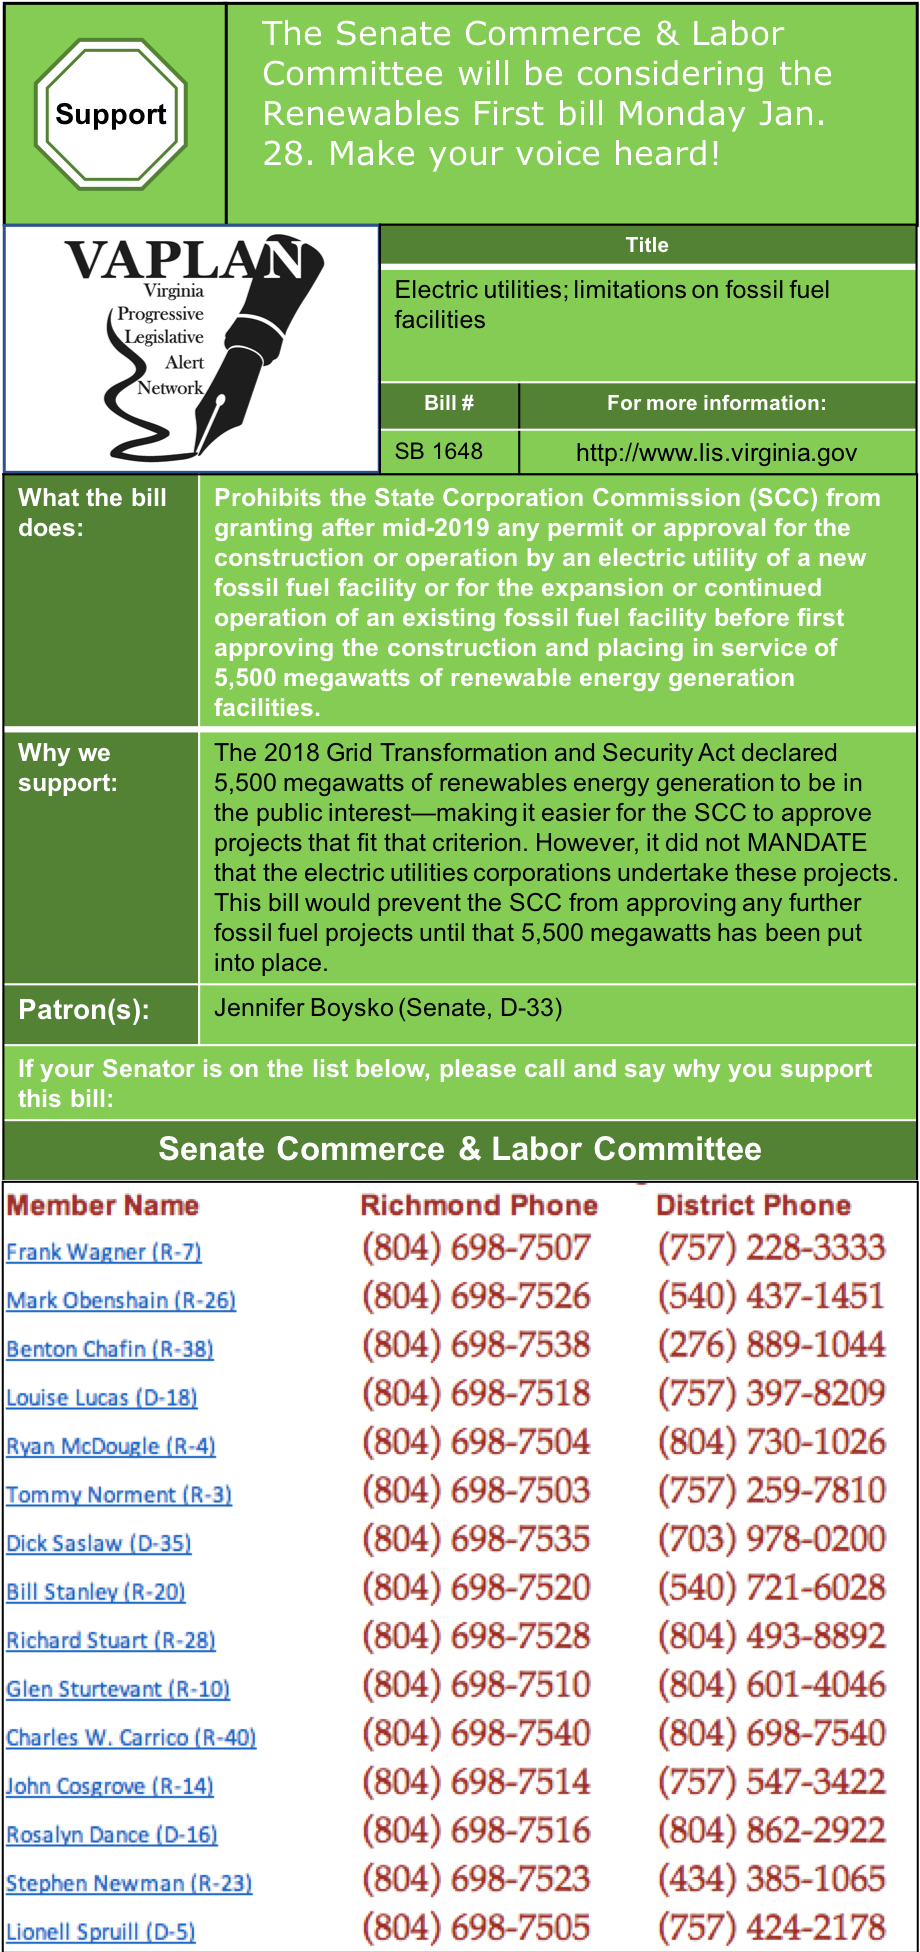 ALERT: Senate Commerce & Labor to consider Renewables First bill on Monday Jan. 28.